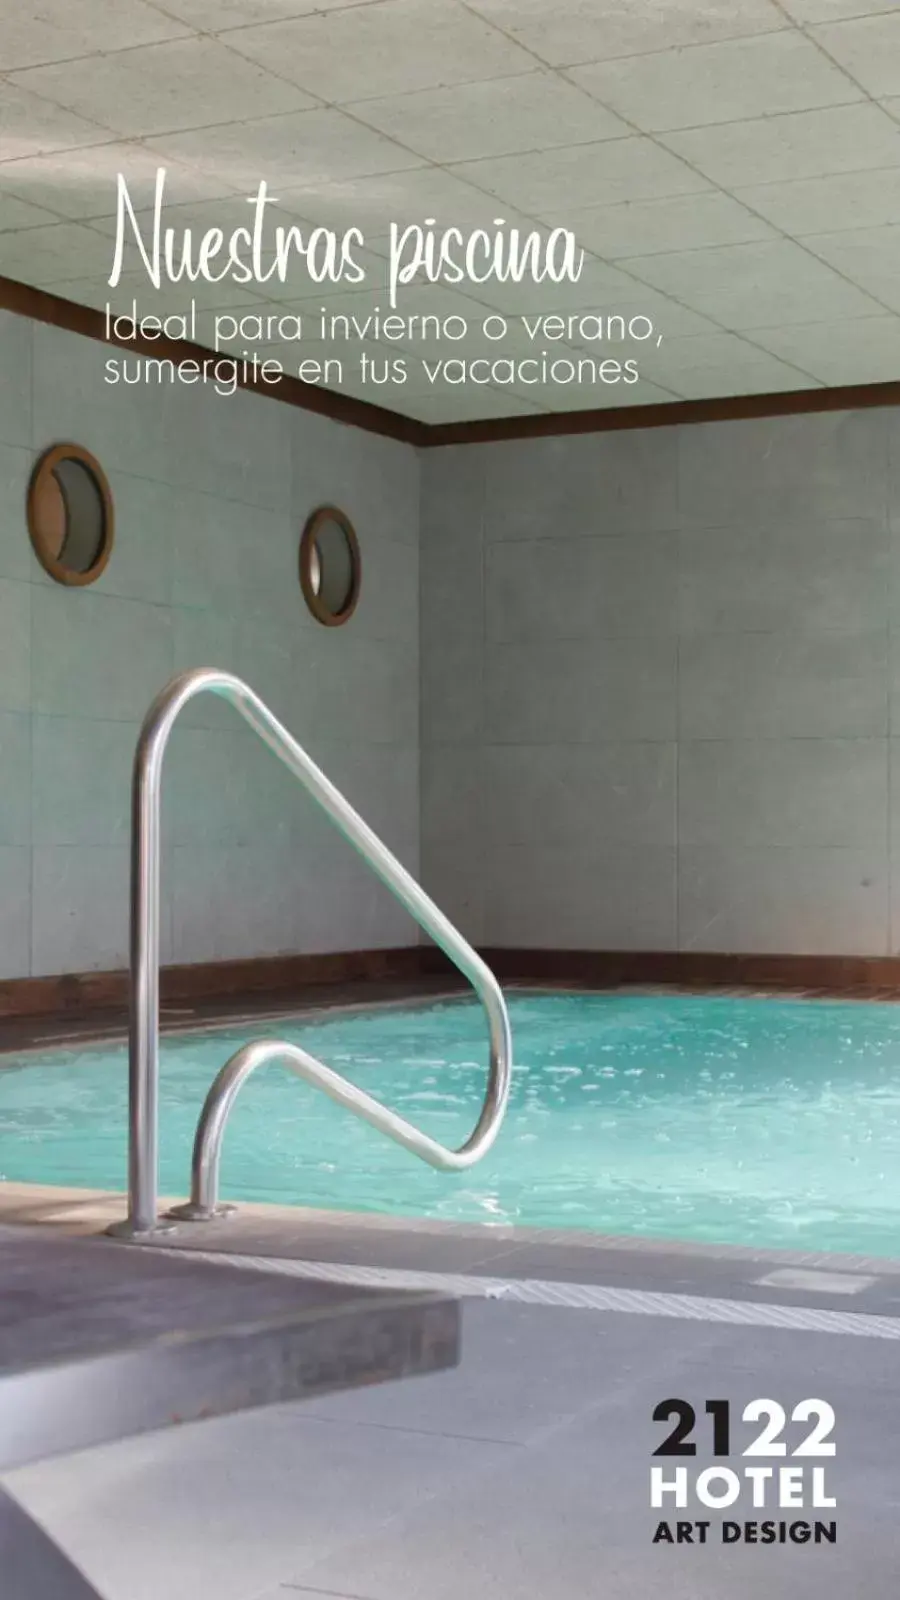 Swimming Pool in 2122 Hotel Art Design